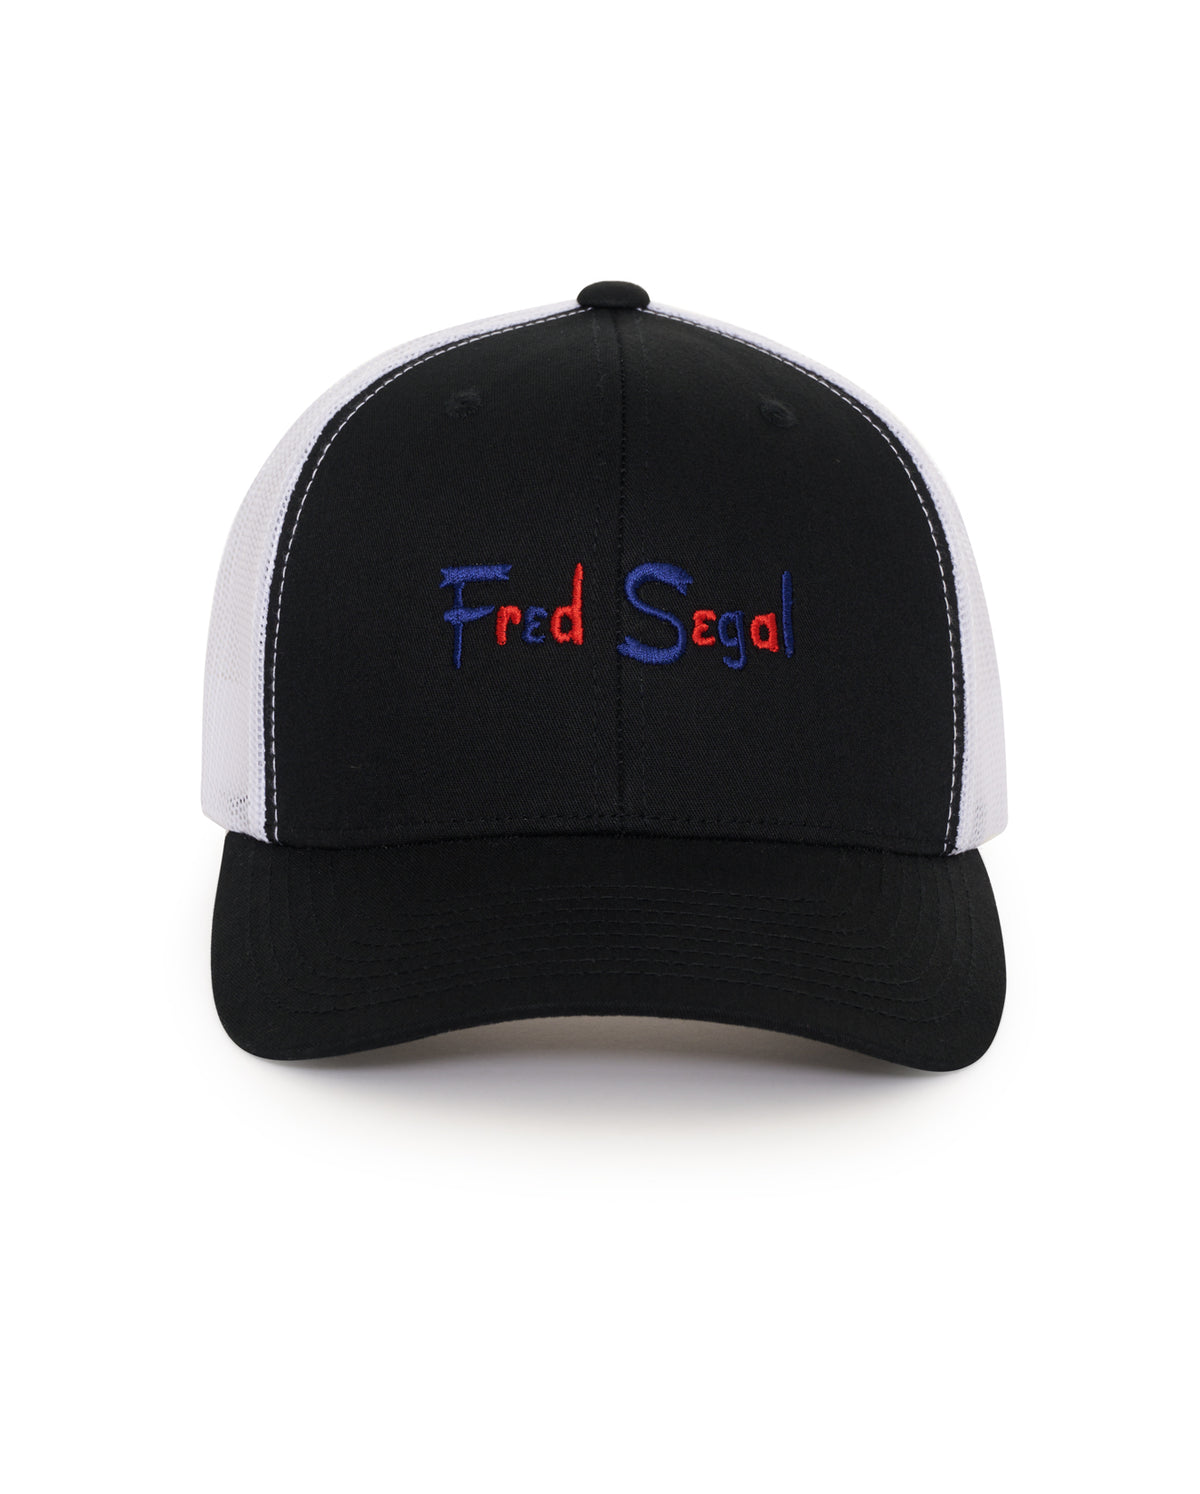 FS Trucker Hat - Black